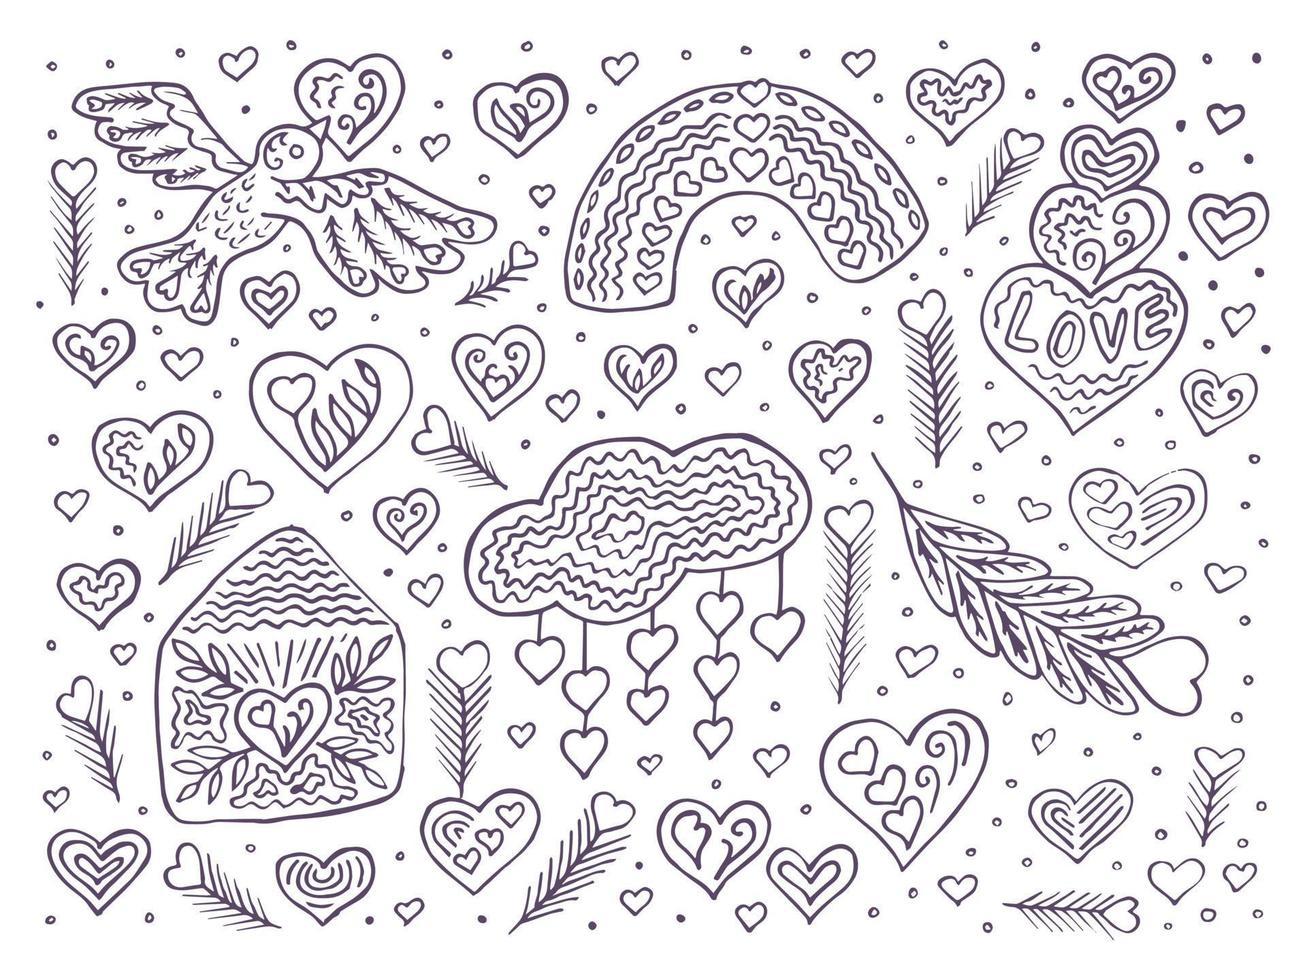 Love post office doodle vector